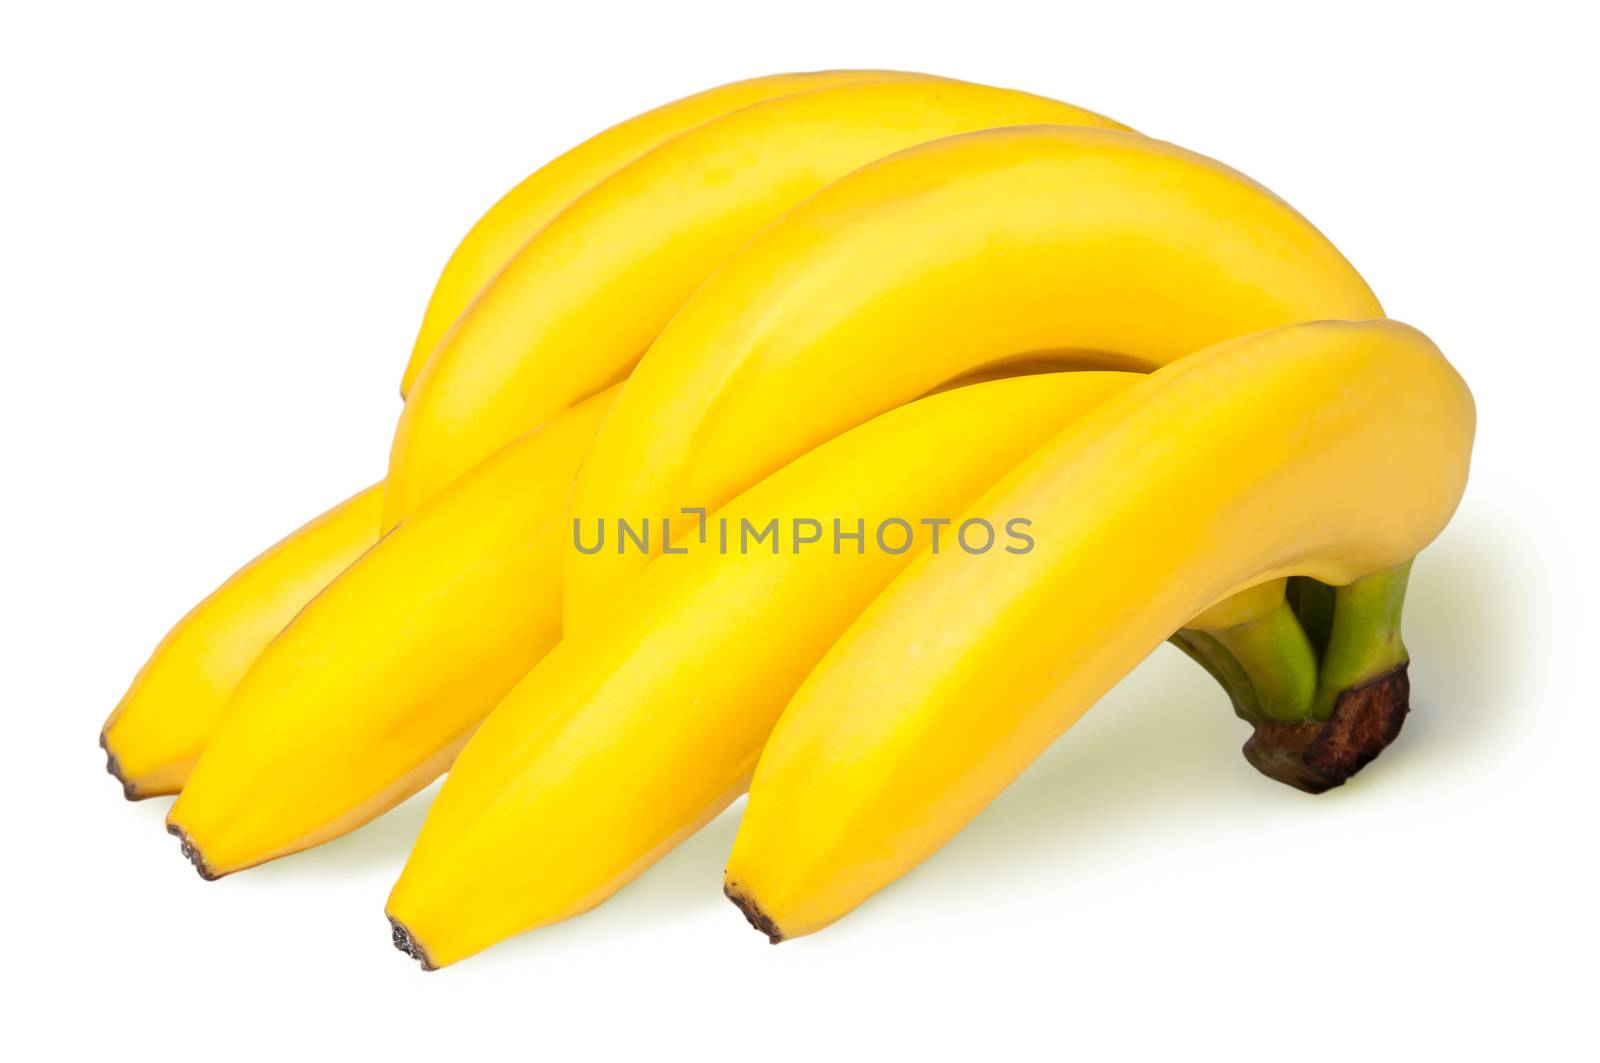 Bunch Of Bananas by Cipariss